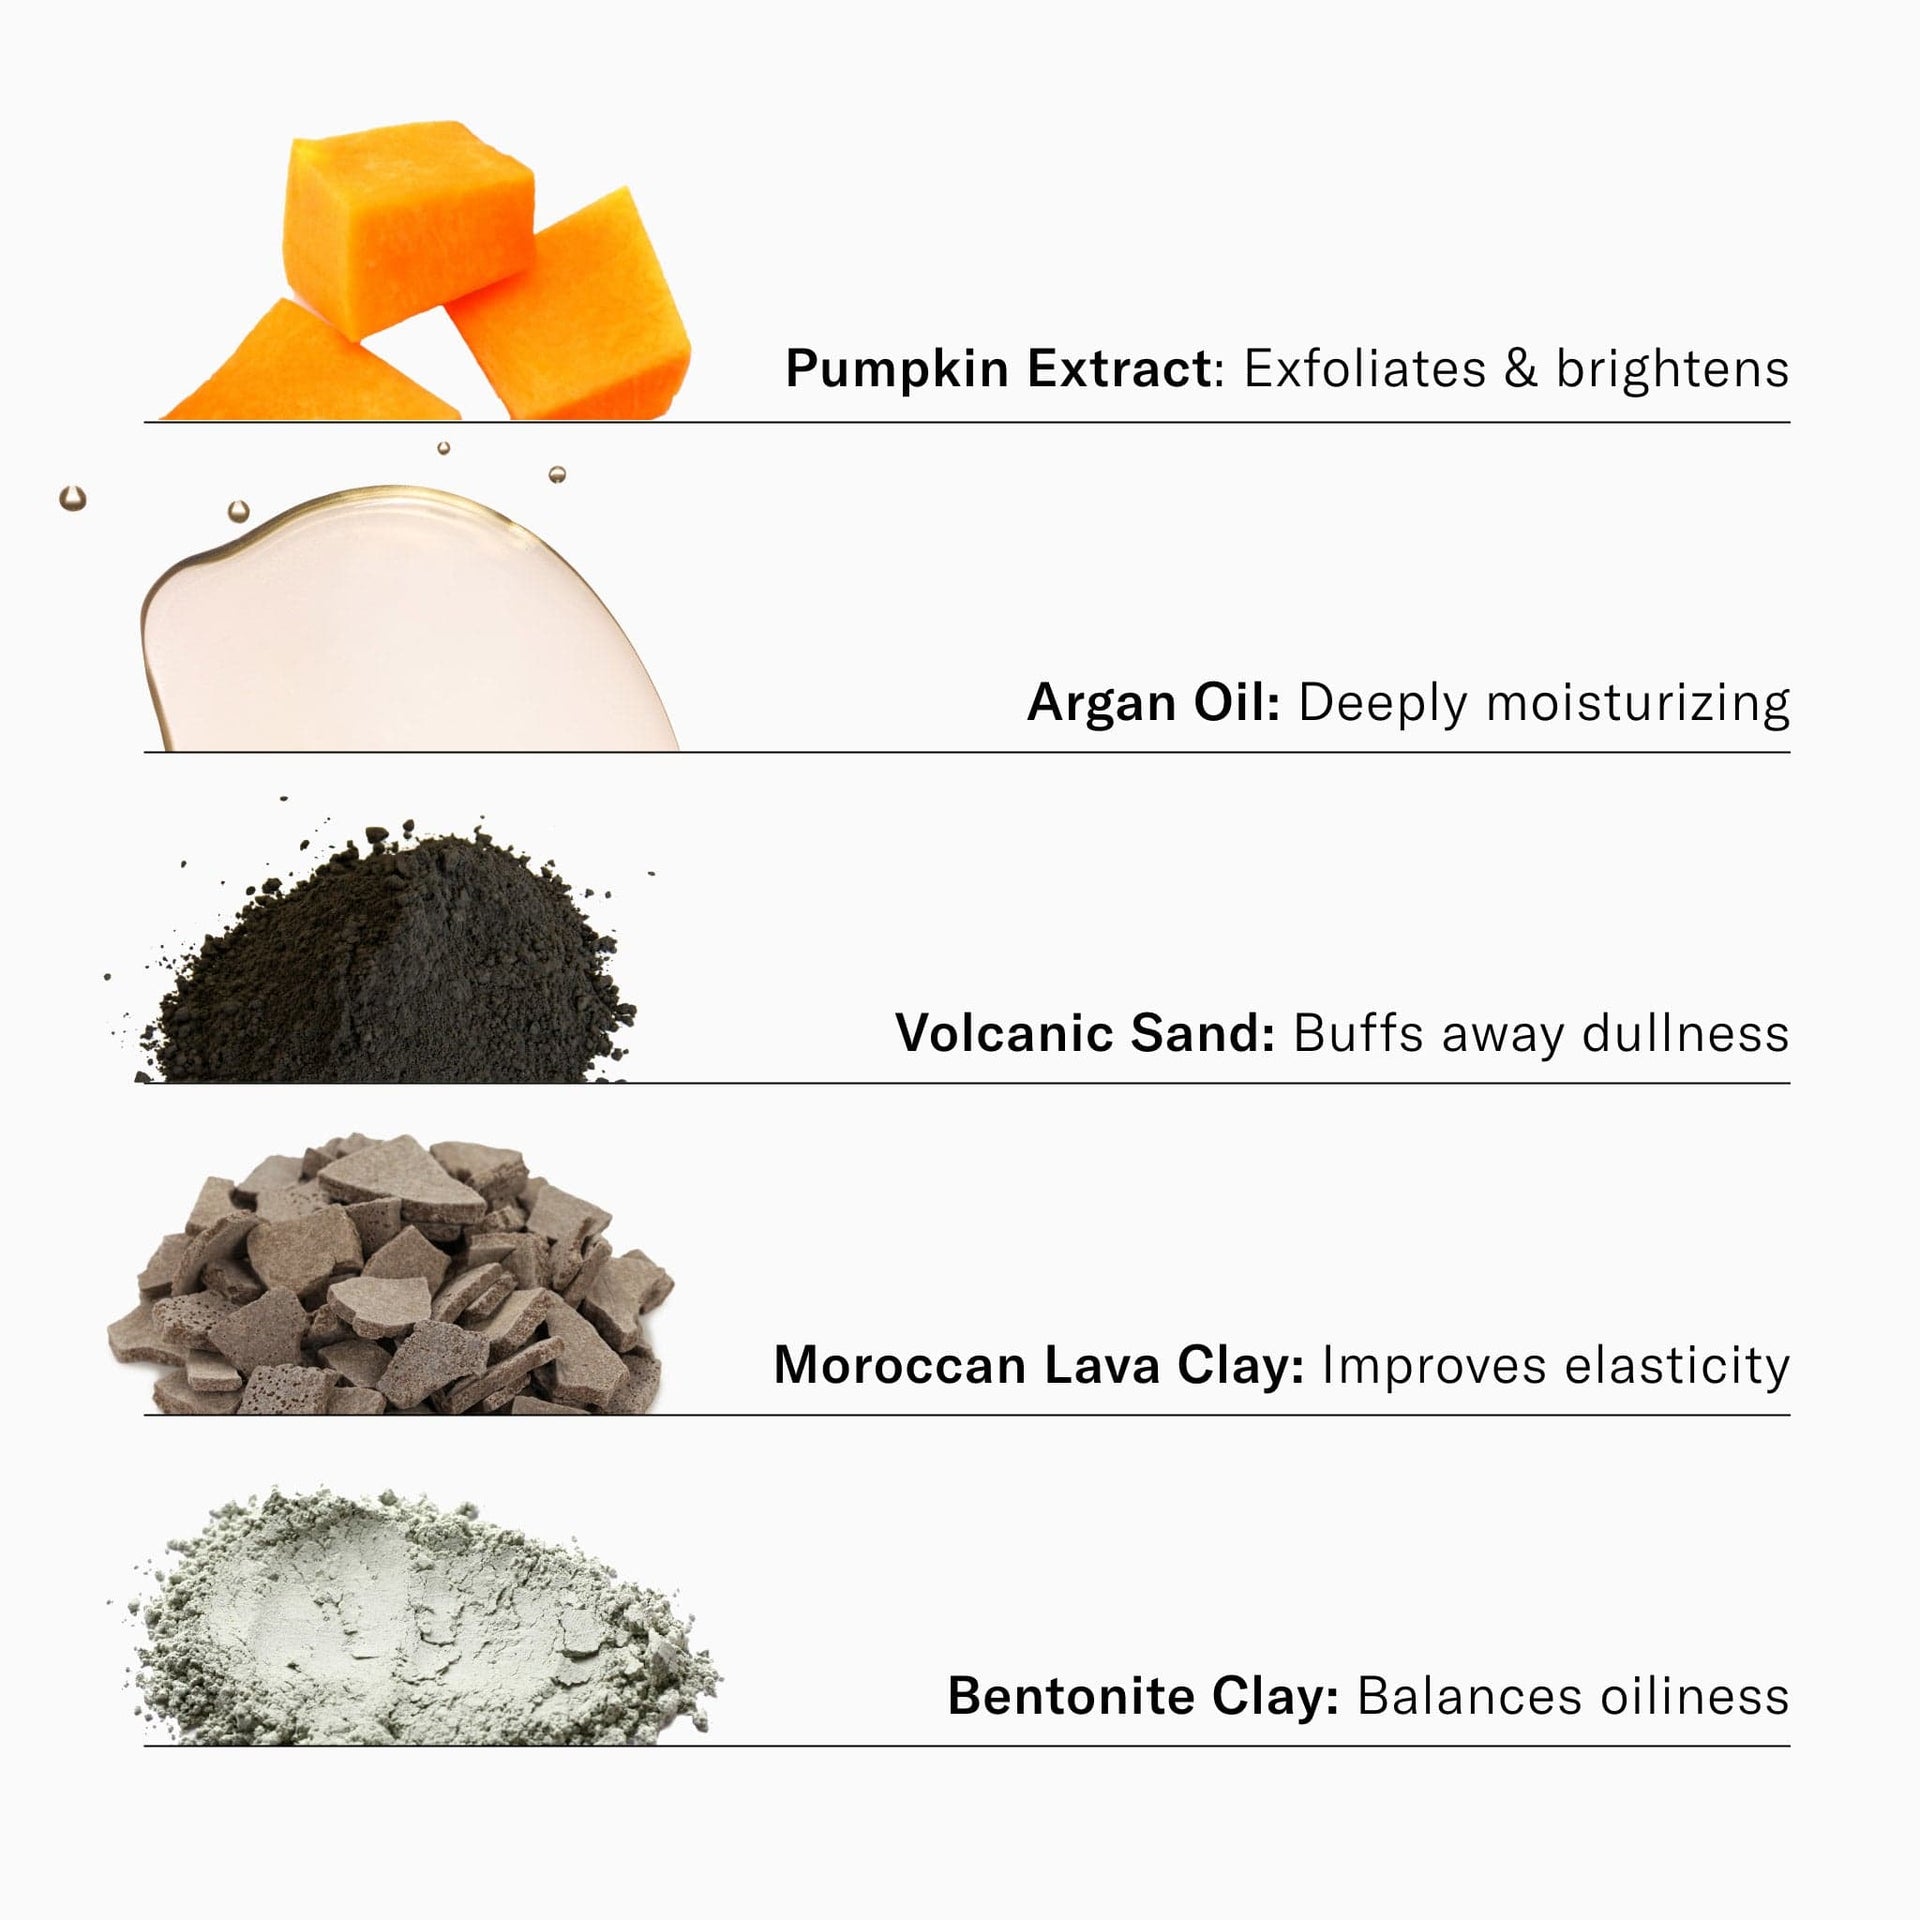 Ingredients. Pumpkin Extract. Argan Oil. Volcanic Sand. Moroccan Lava Clay. Bentonite Clay. 